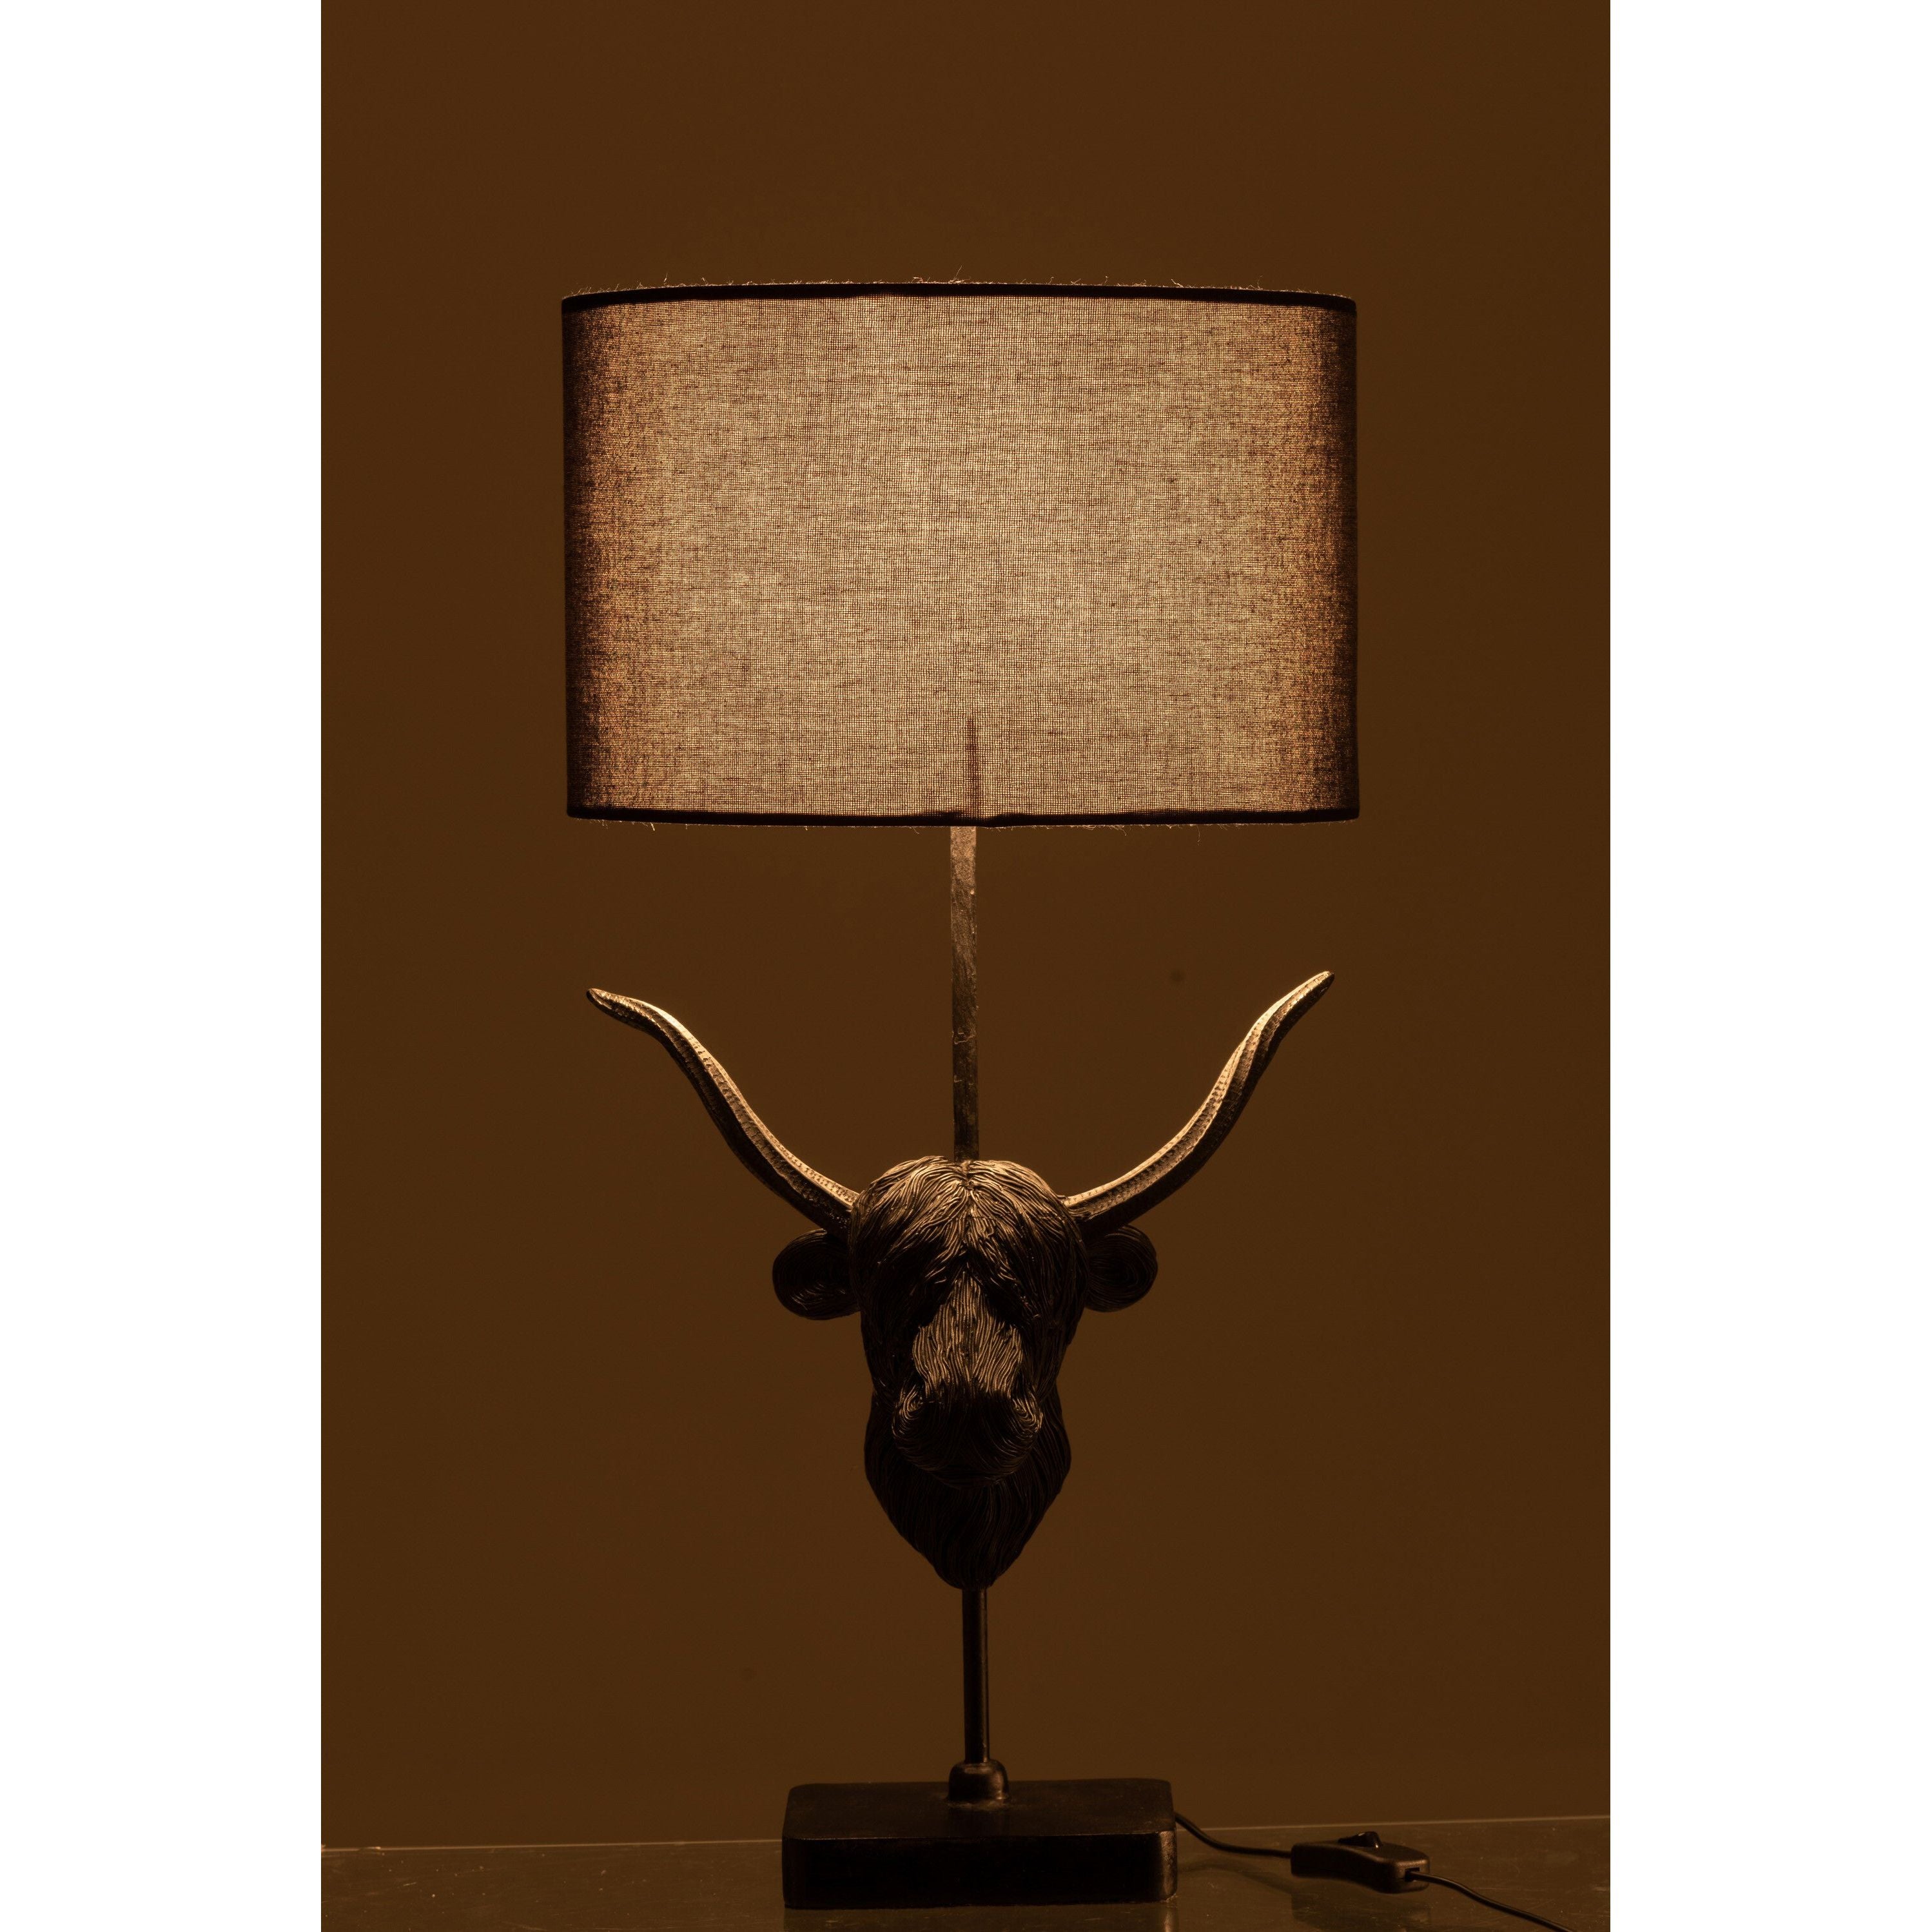 Lamp Buffel Poly Zwart